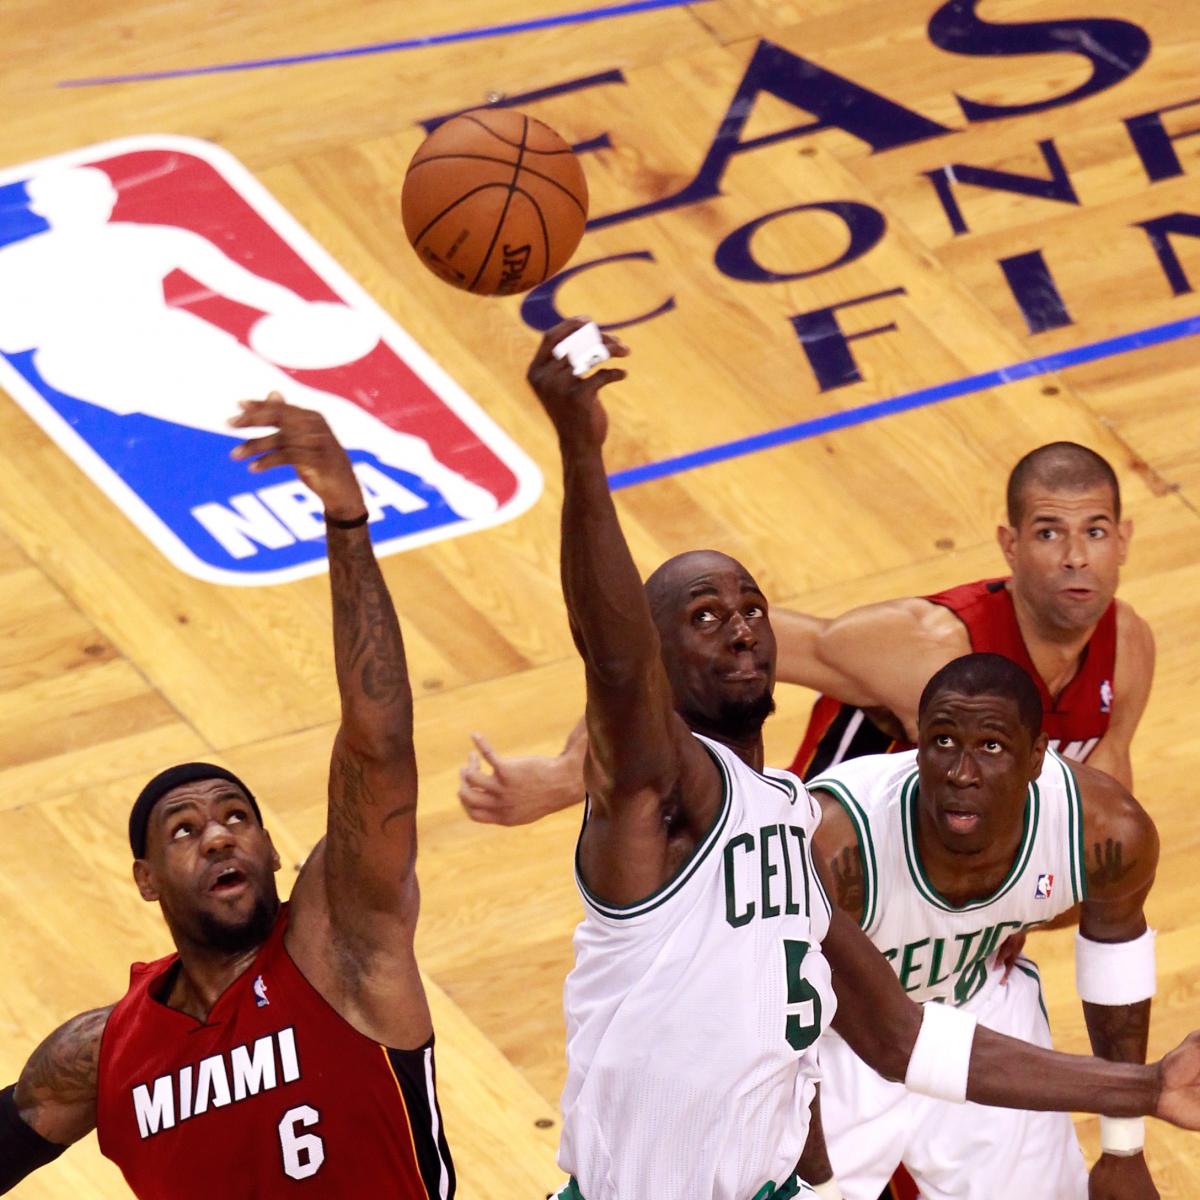 Boston Celtics Where Will They Finish This Season? News, Scores